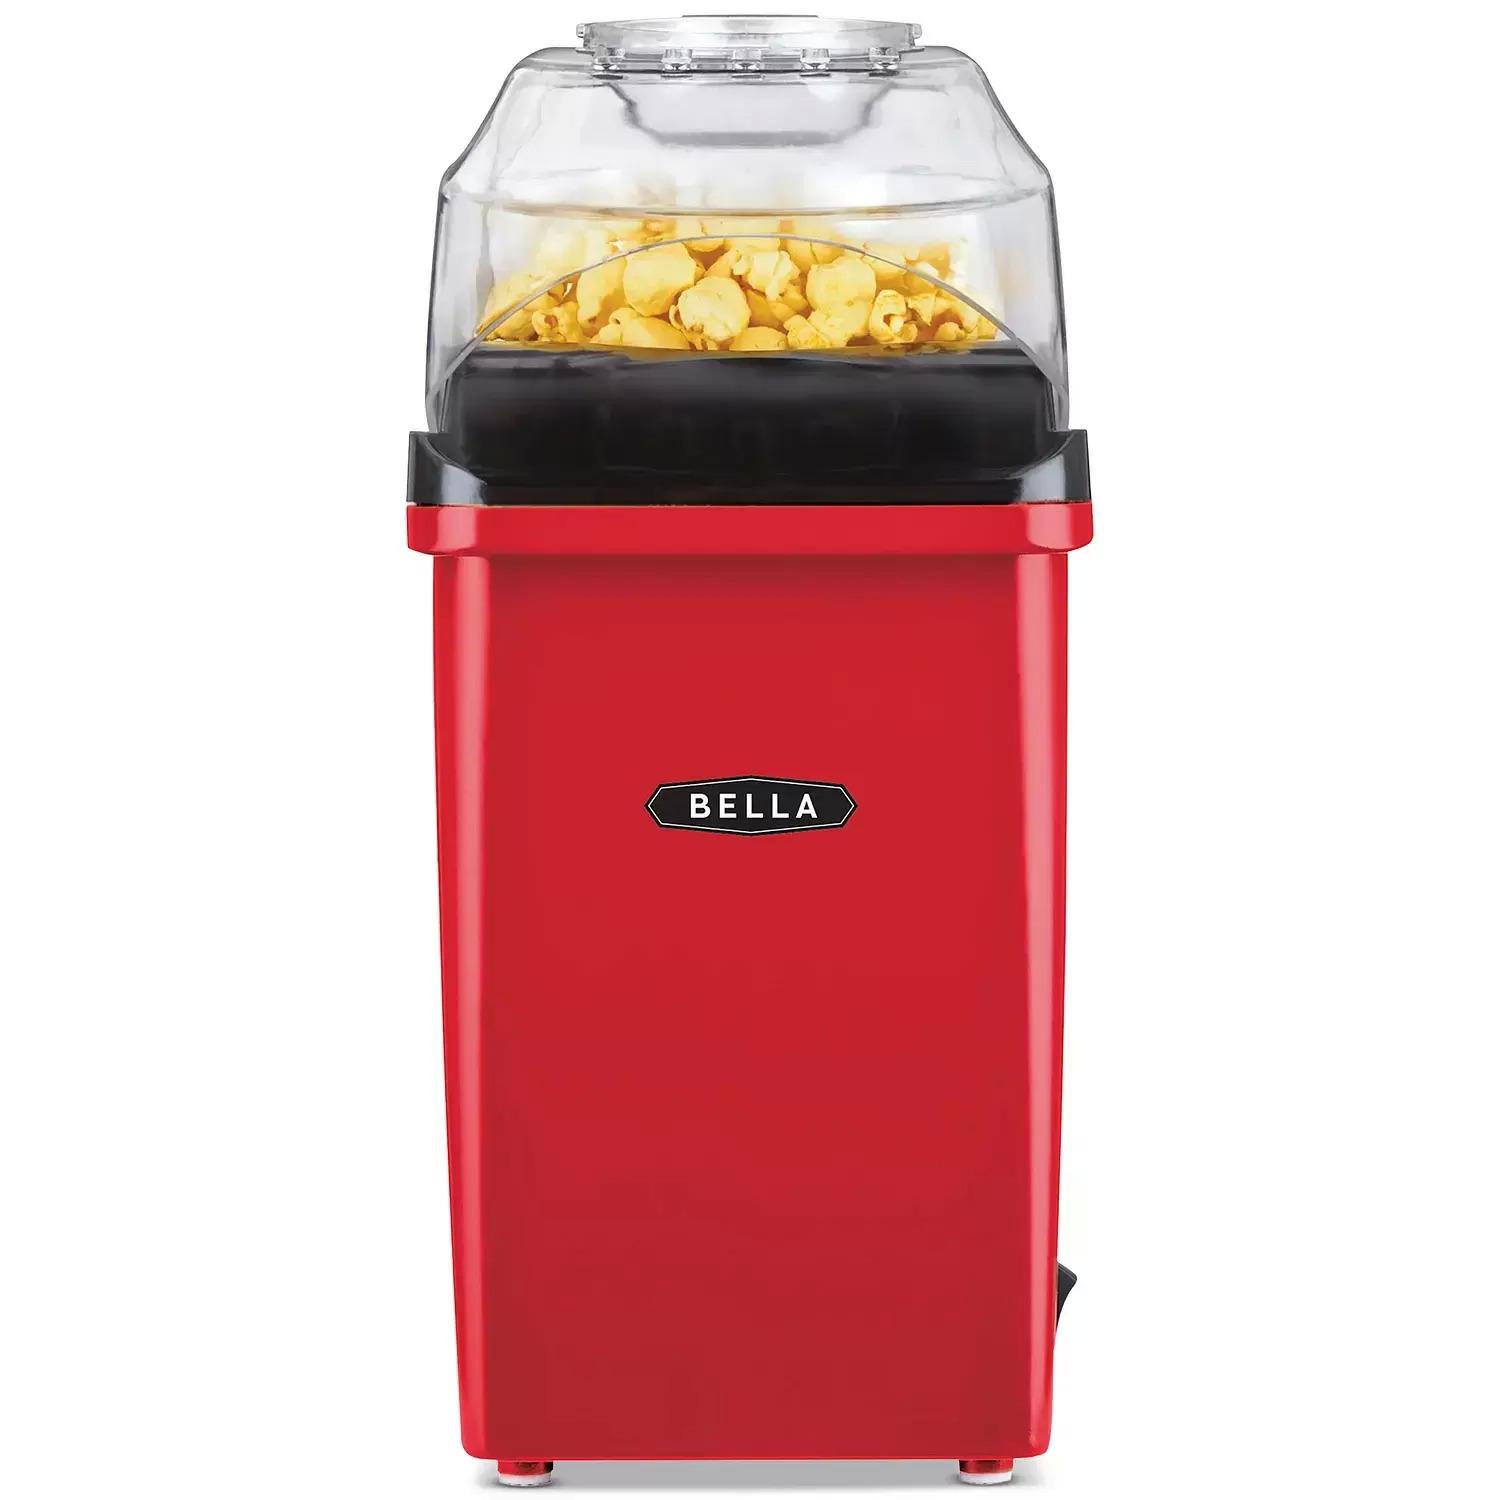 Bella Hot Air Popcorn Maker for $9.99